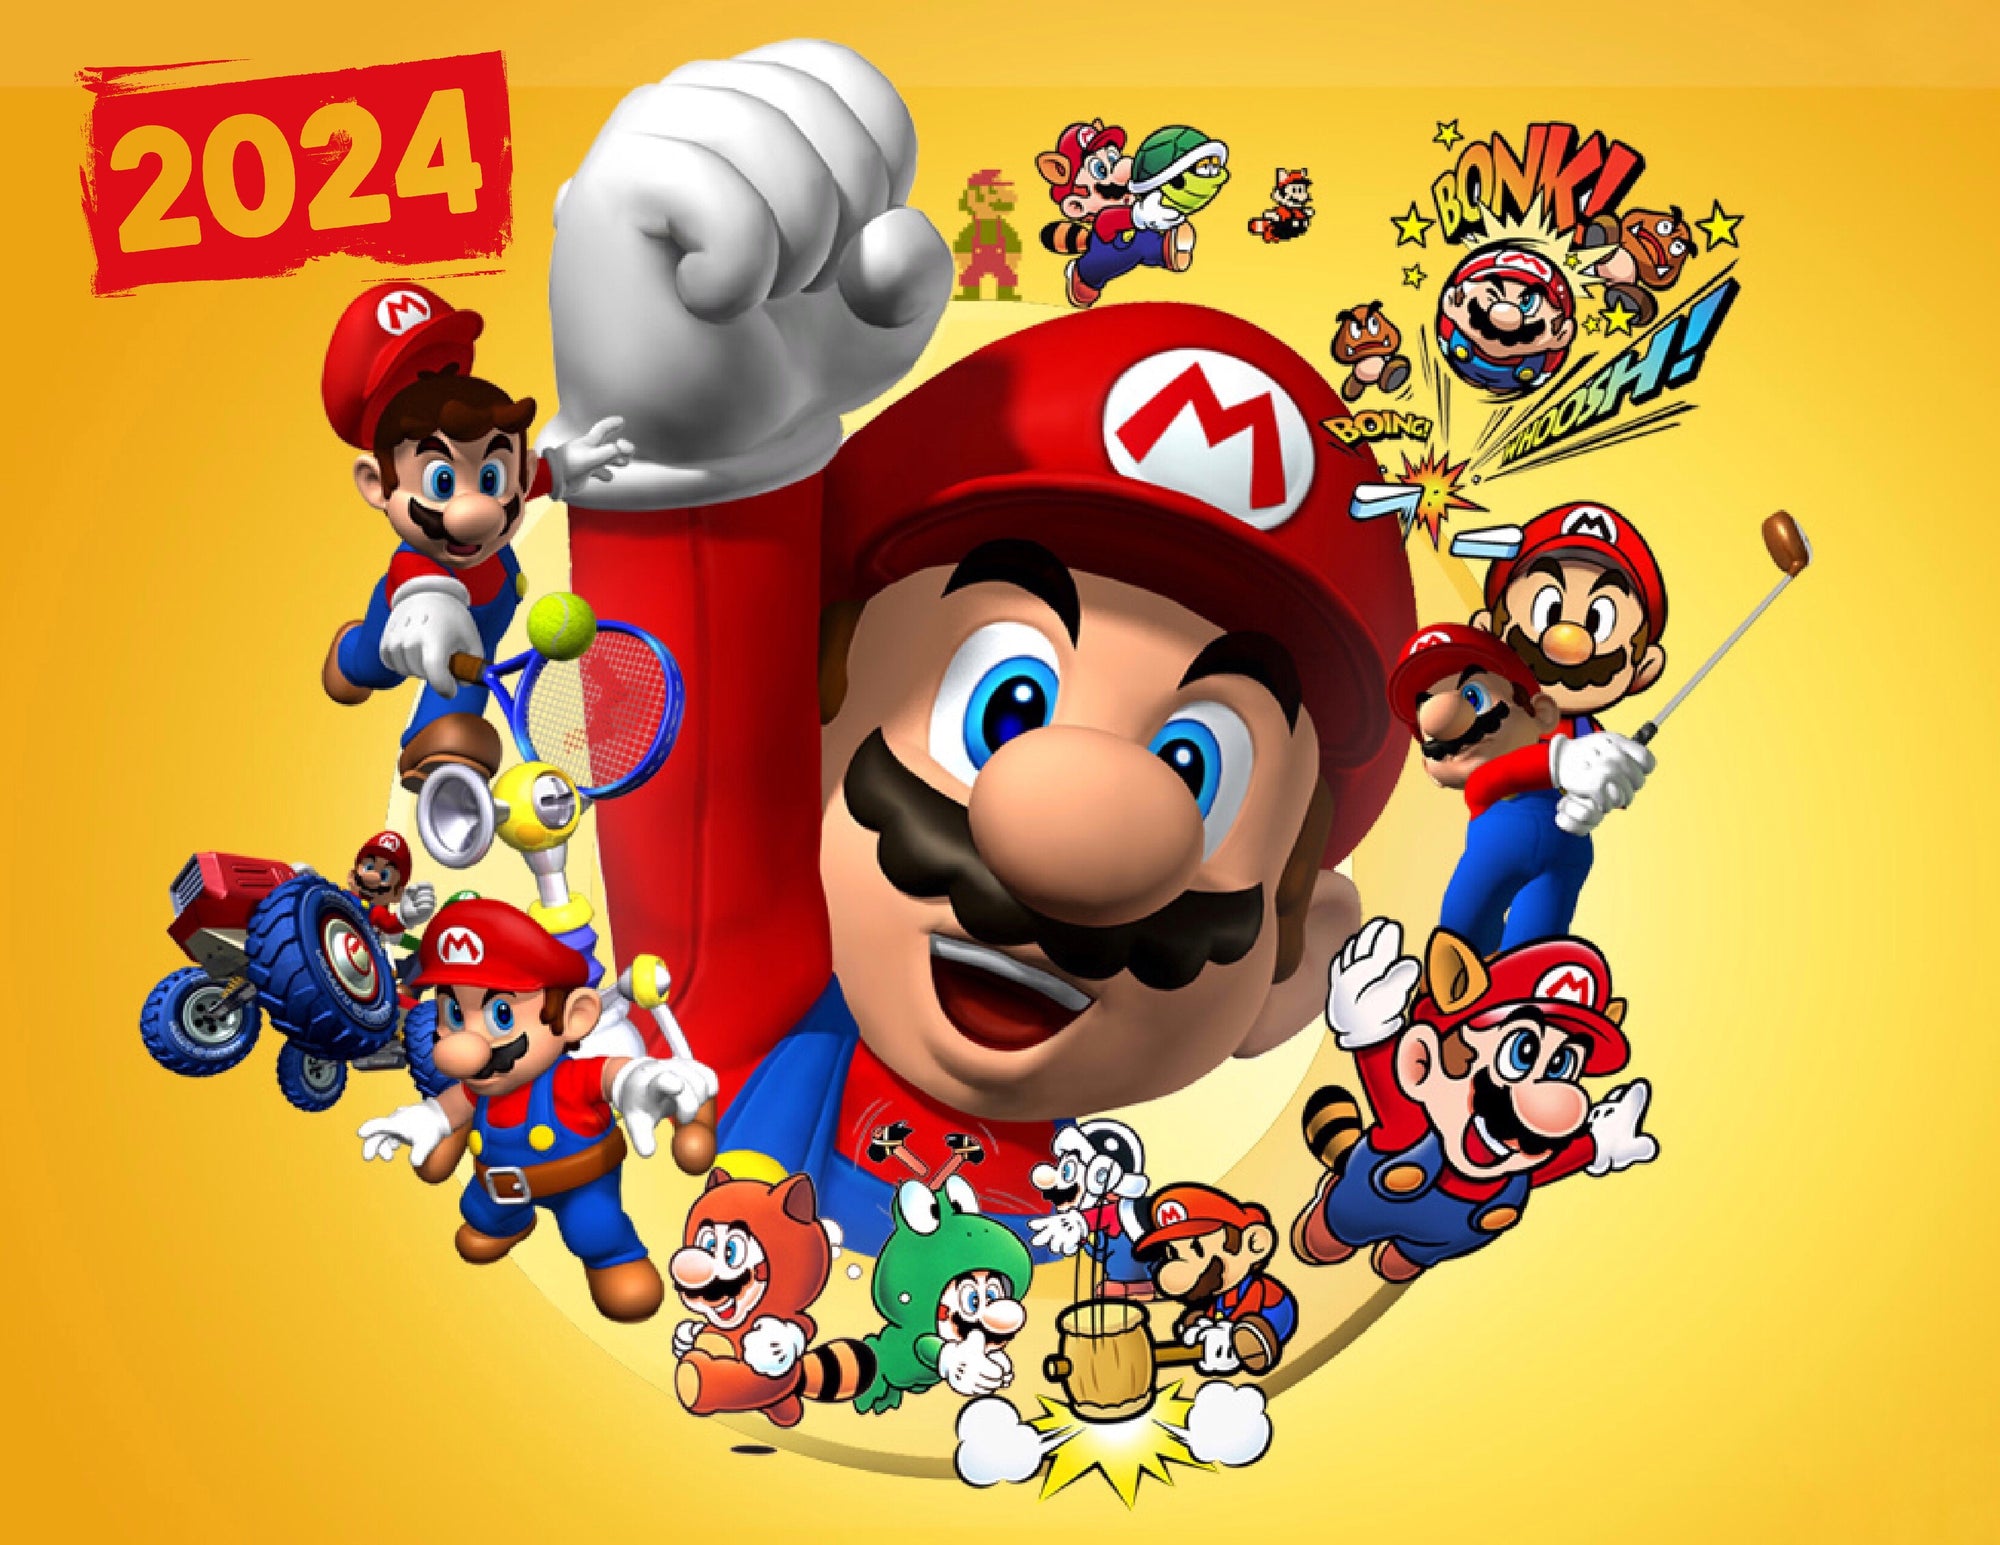 The Super Mario Bros. Movie 2 (2024)